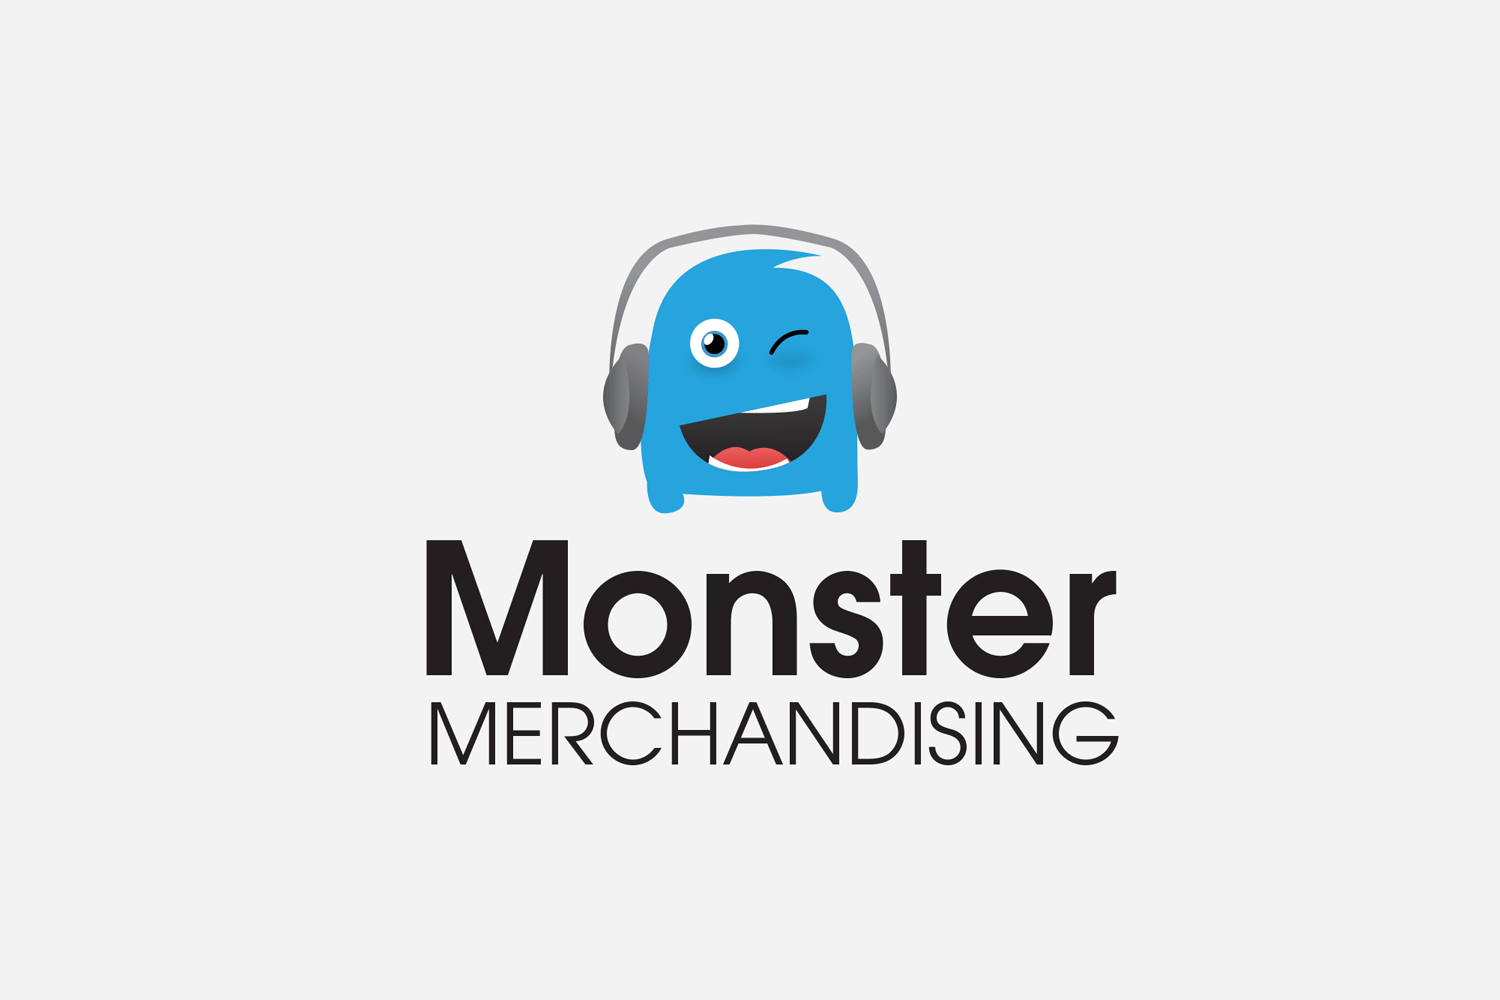 Merchandising Logo - Monster Merchandising, Brand Logo